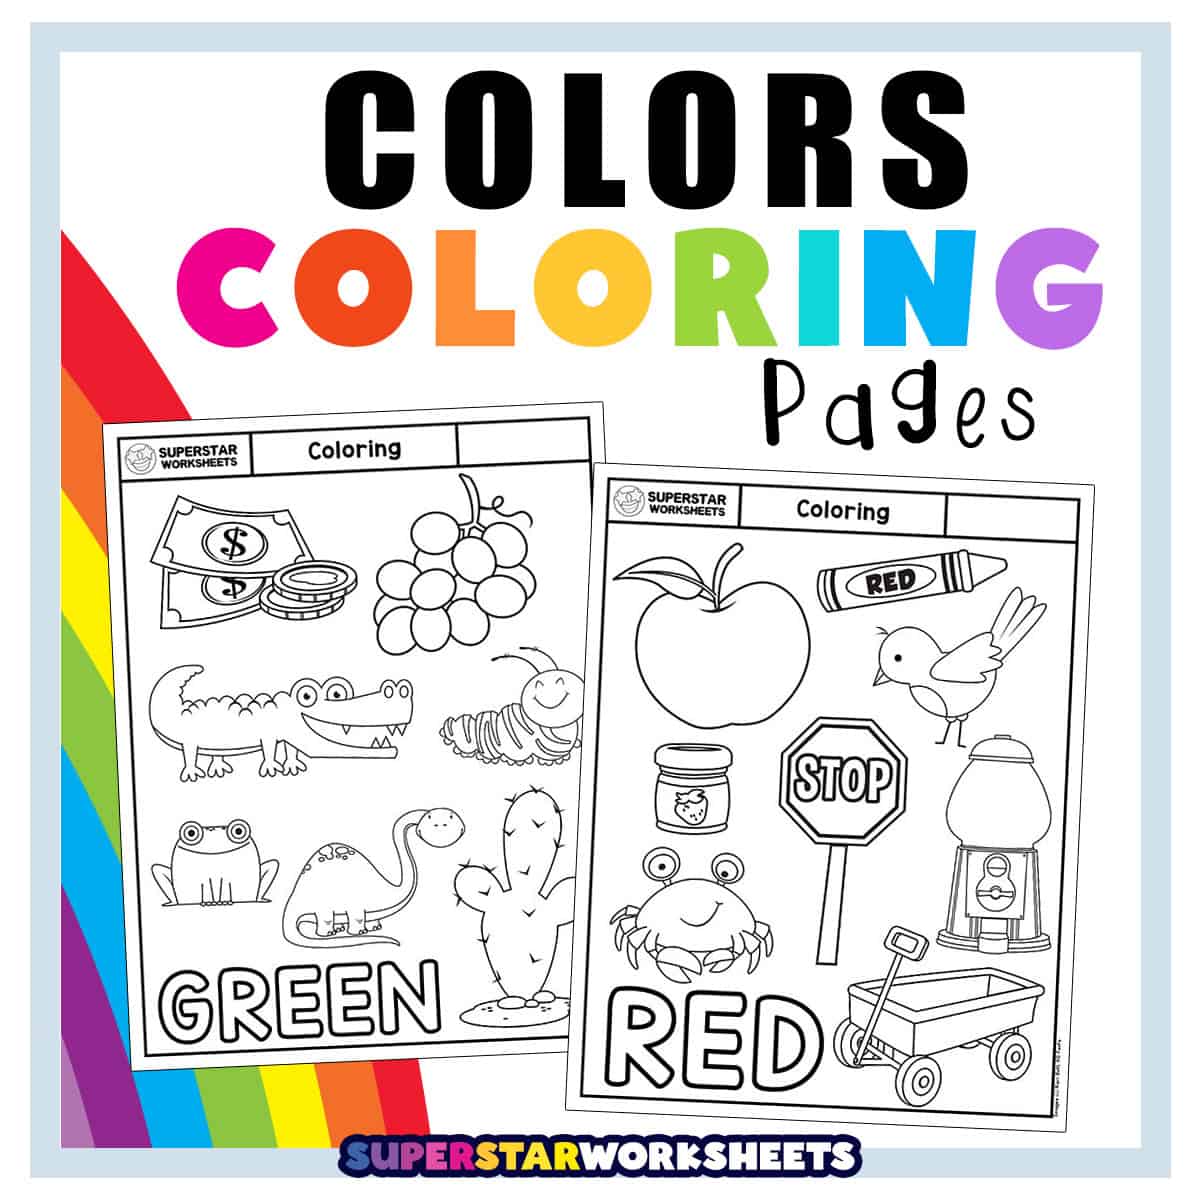 Coloring worksheets for preschool